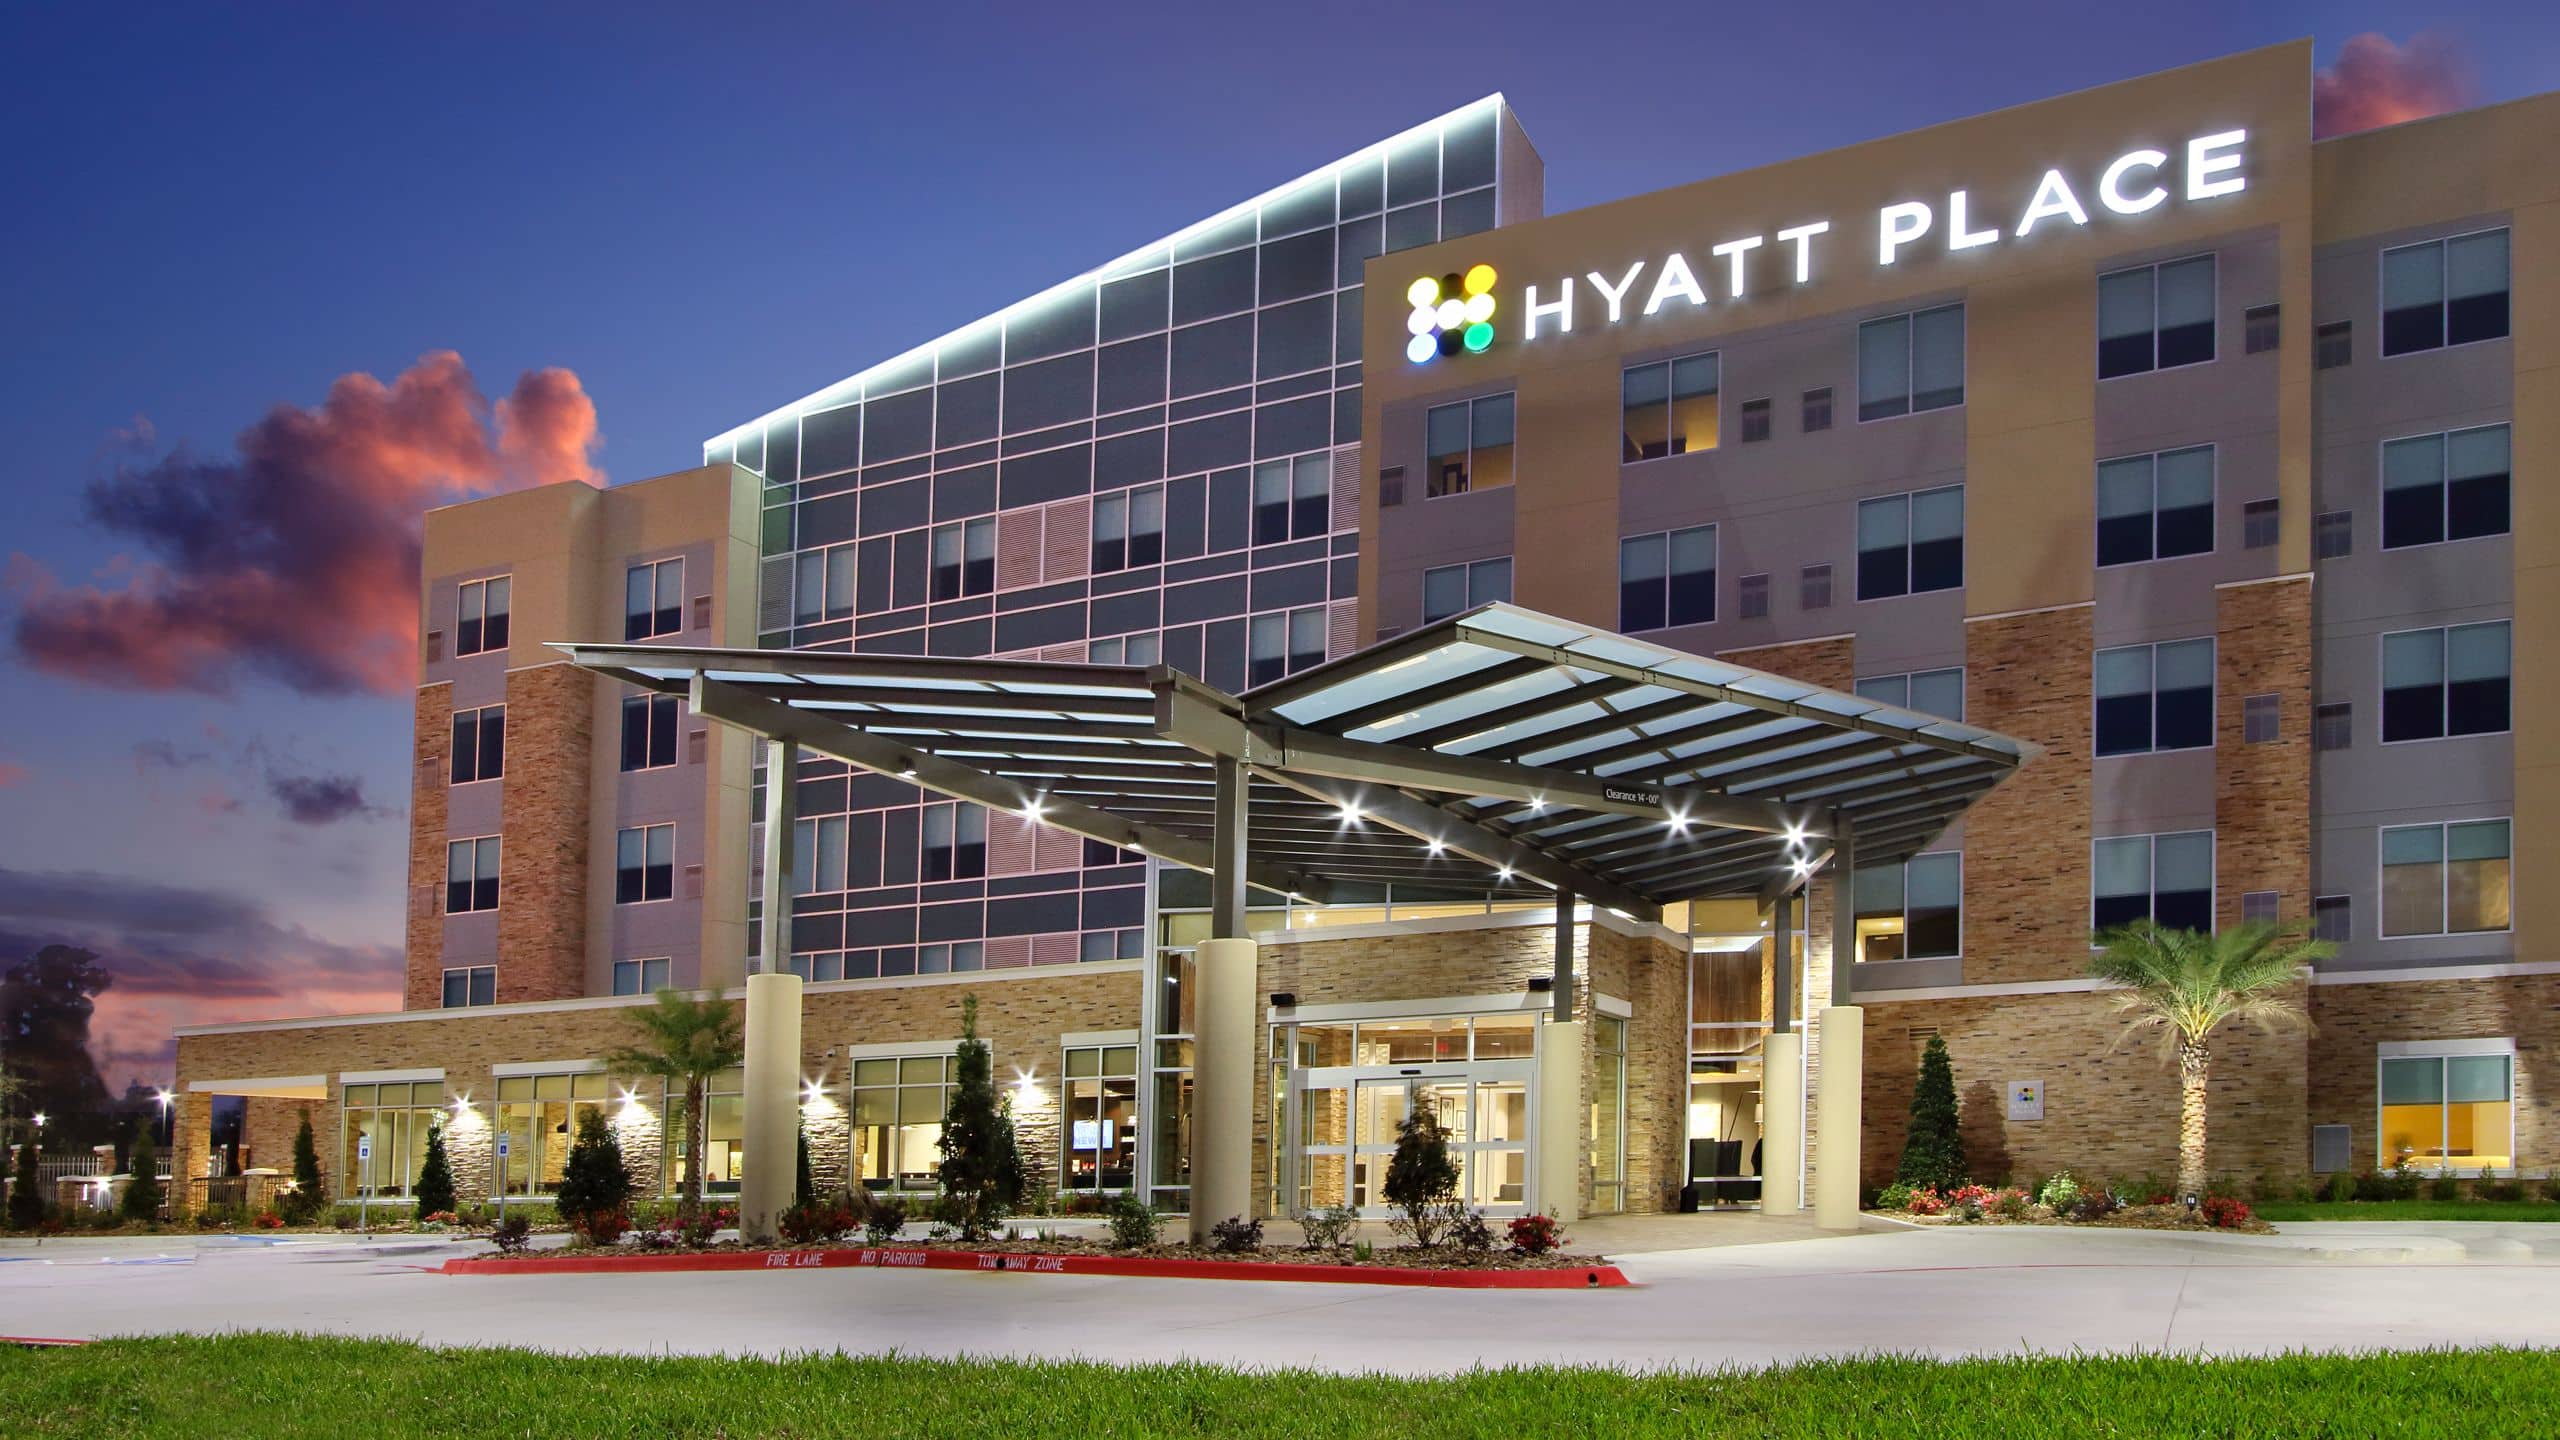 Hyatt Place Hotel of Houston - McCarthy